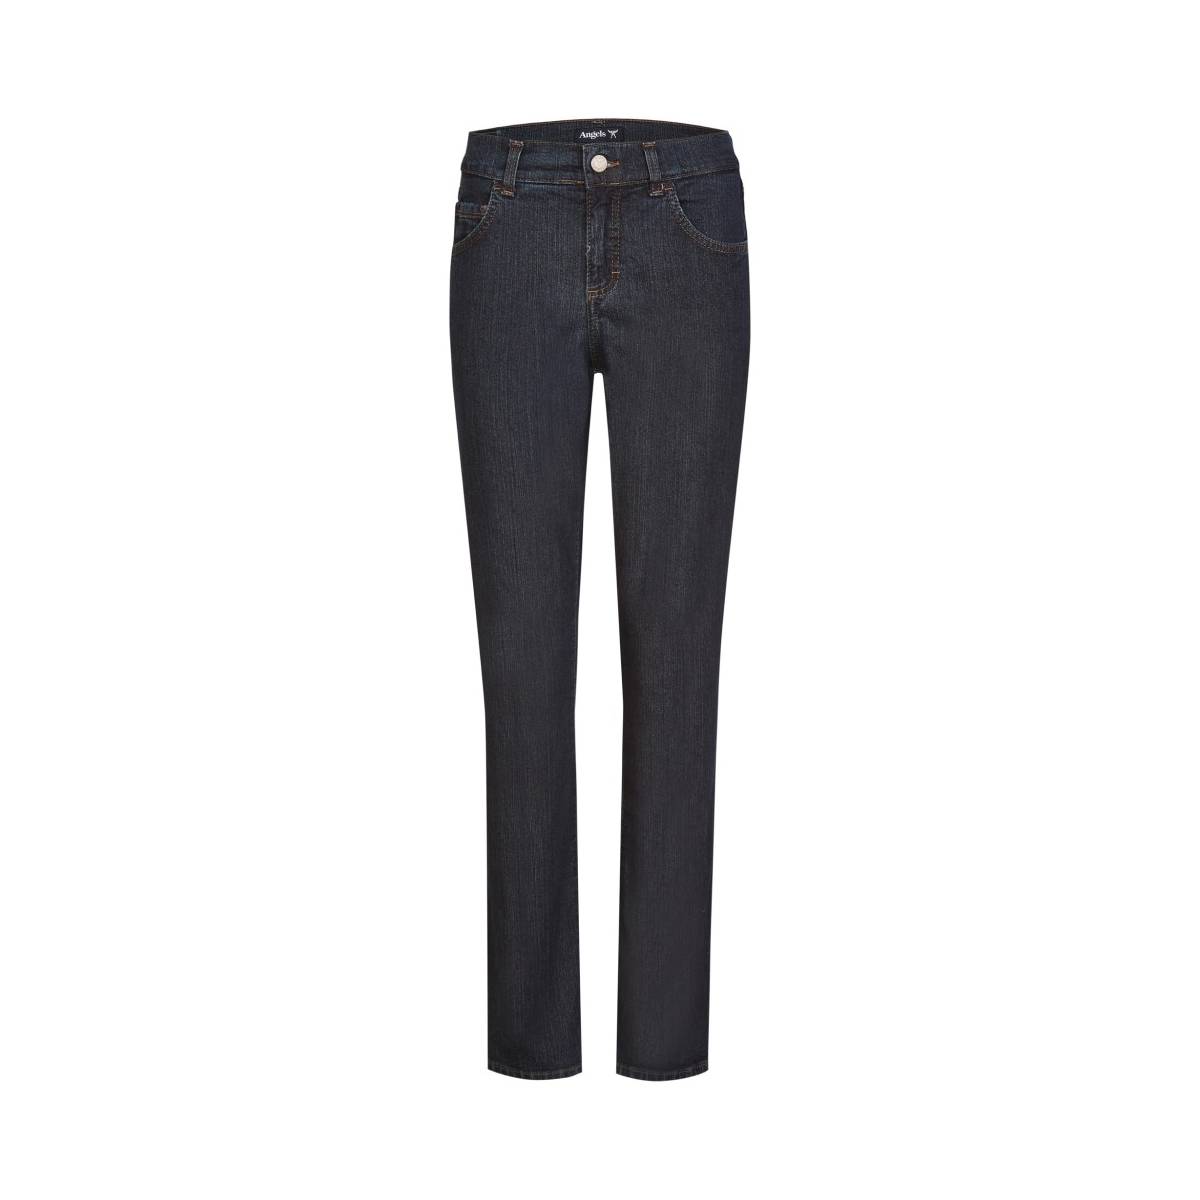 Rechthoek Reis Peuter ANGELS broeken donkere jeans - model dolly/538032 - Dameskleding broeken  jeans